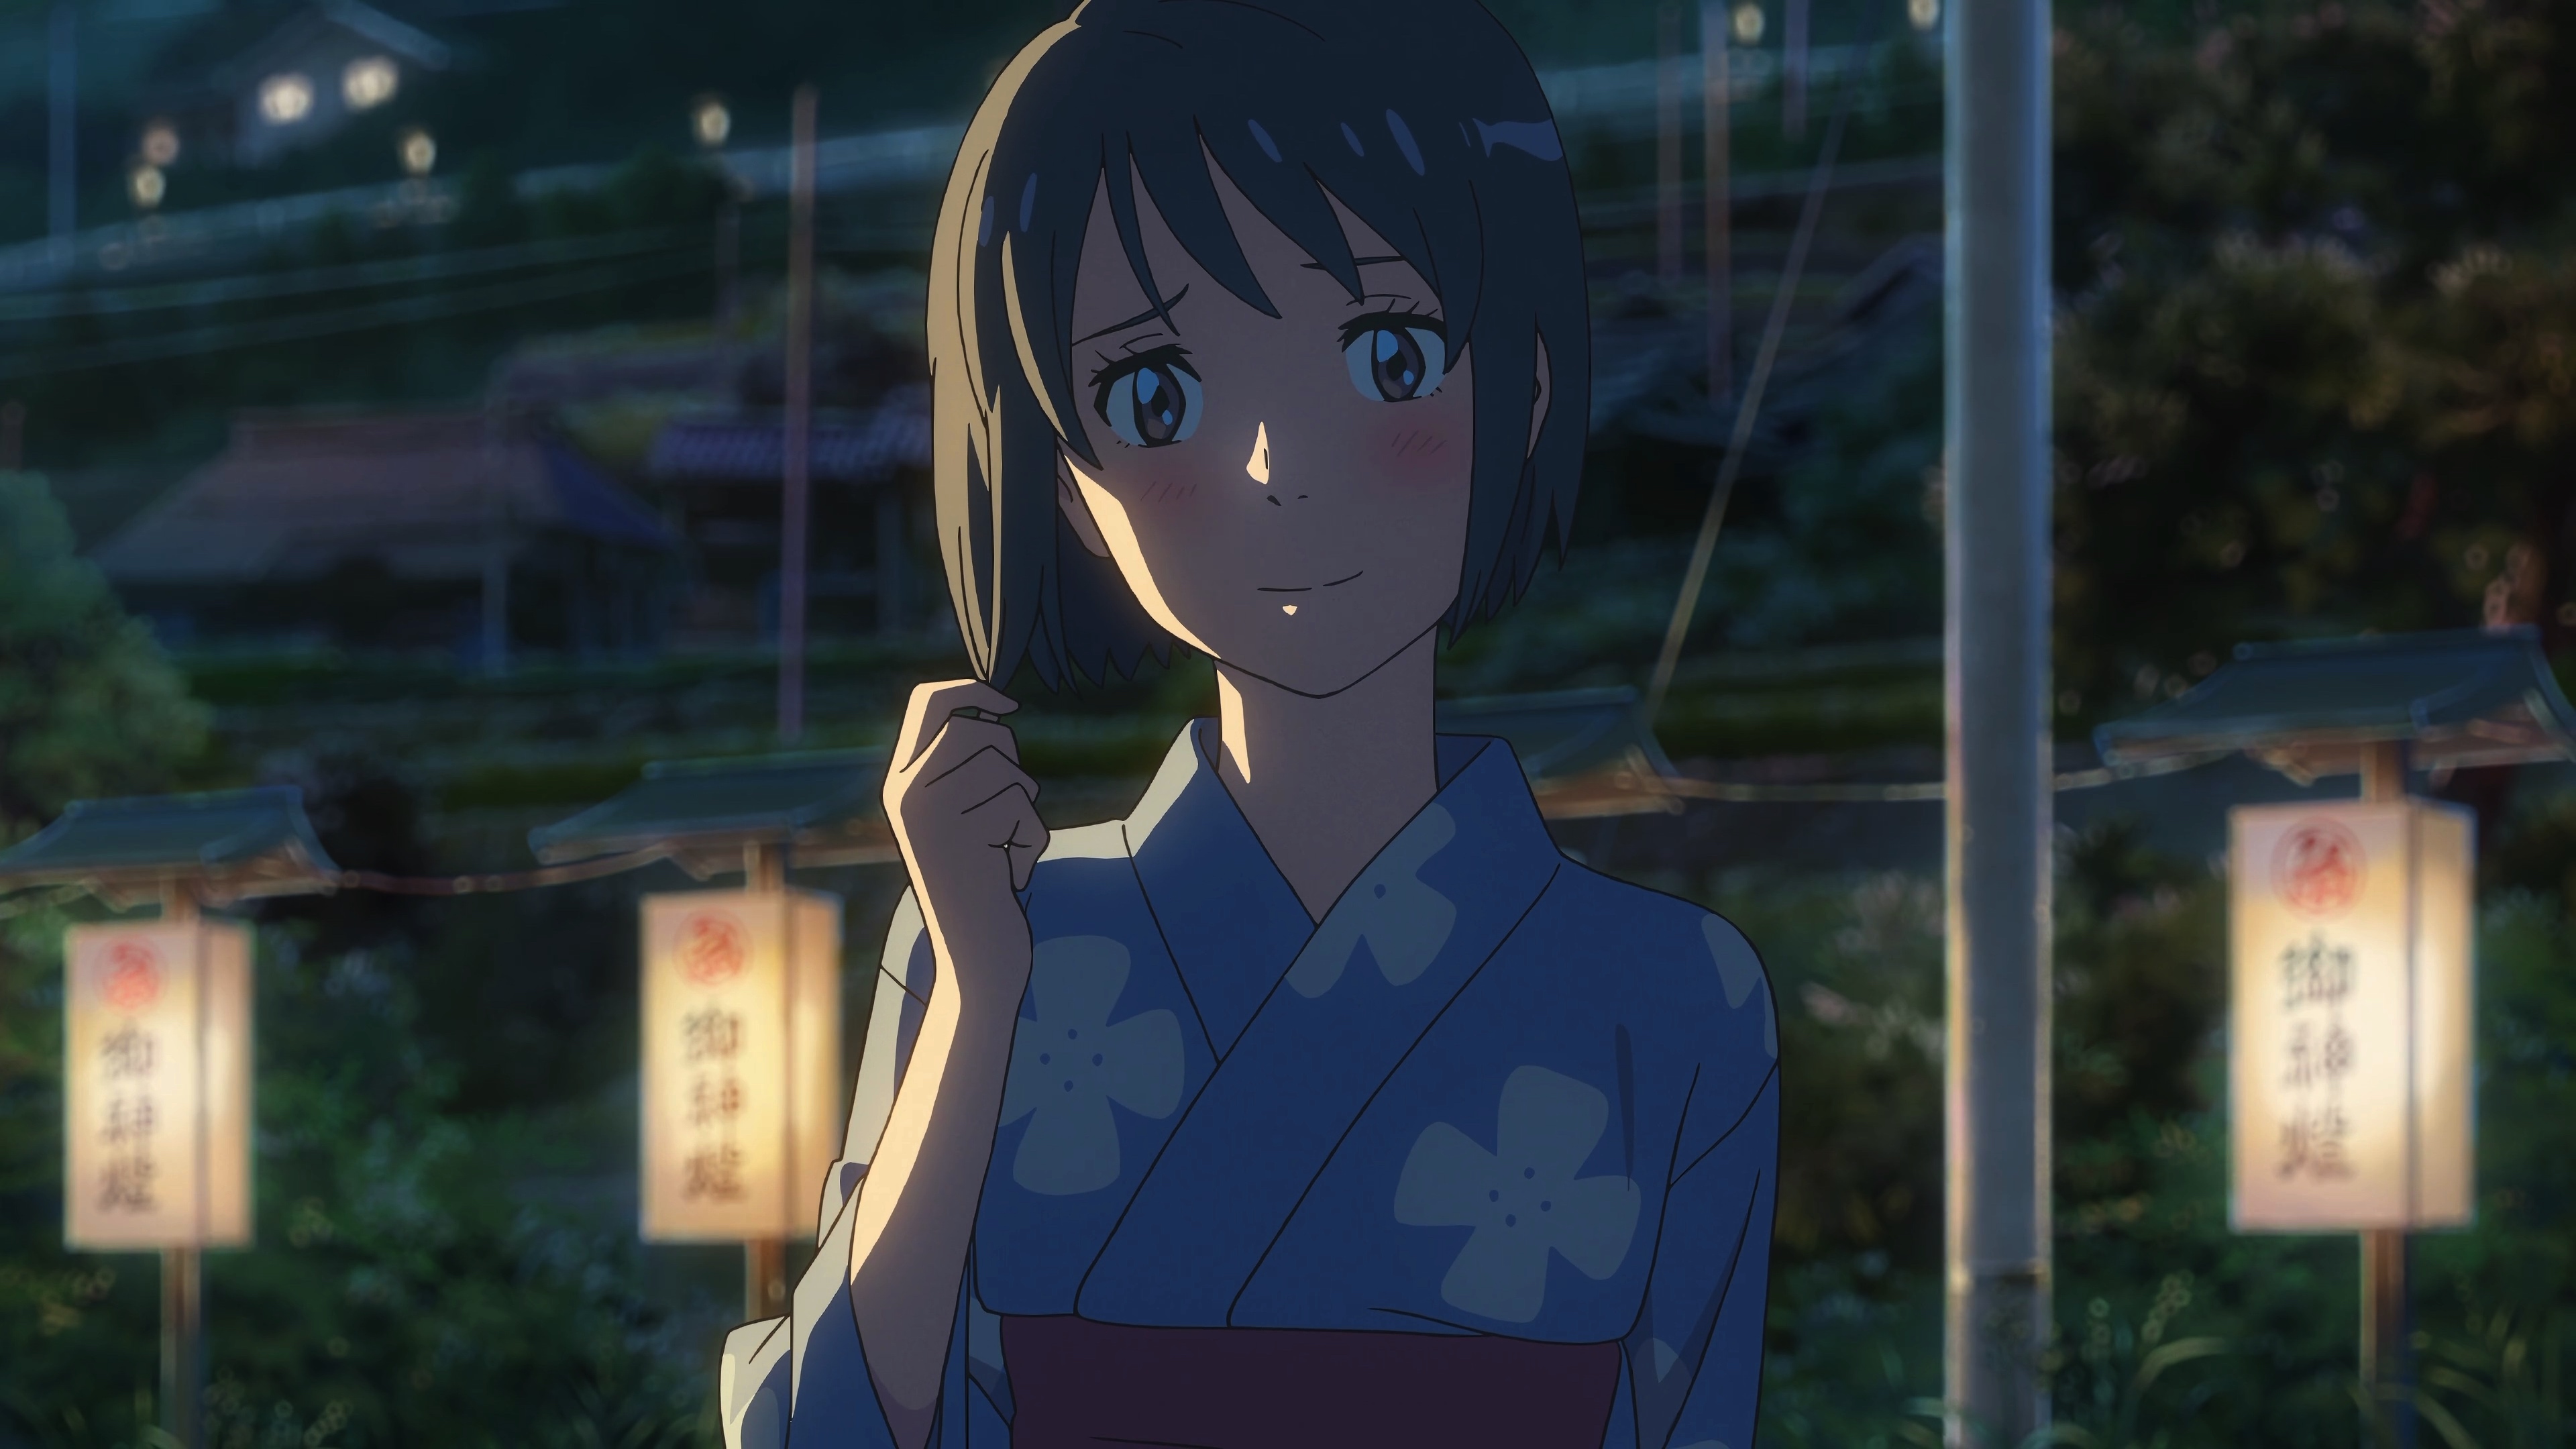 Desktop Wallpaper Makoto Shinkai Your Name Anime Cute Anime Girl Hd Image Picture Background 9b55